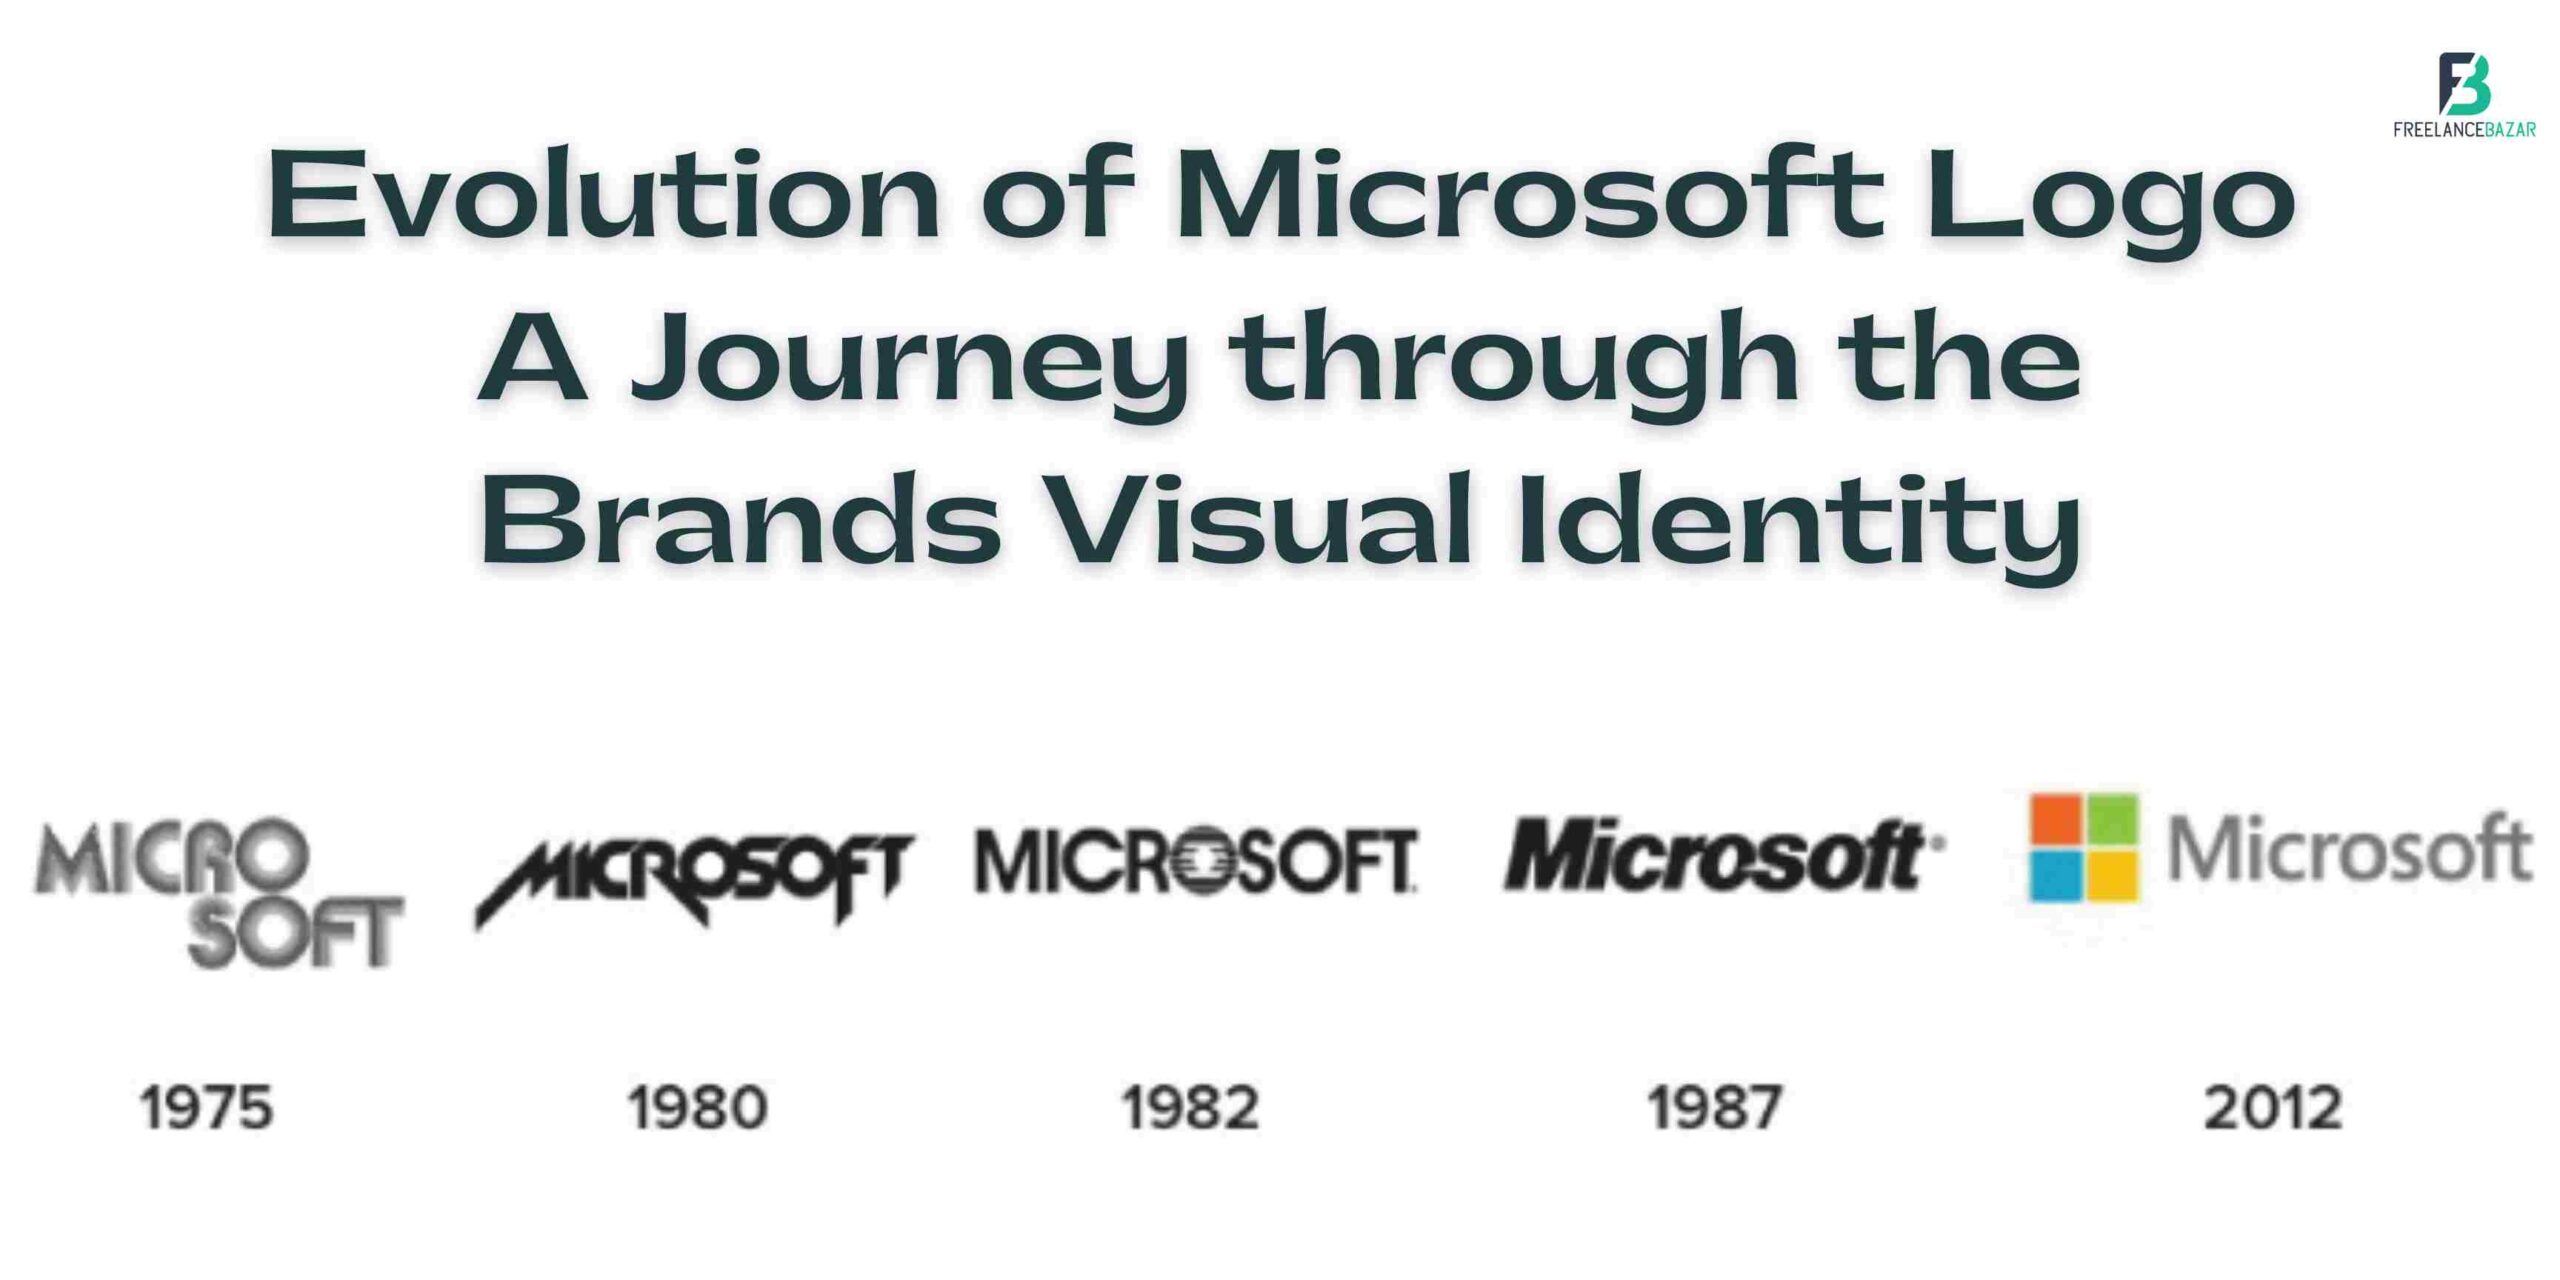 Evolution of Microsoft Logo A Journey through the Brands Visual Identity